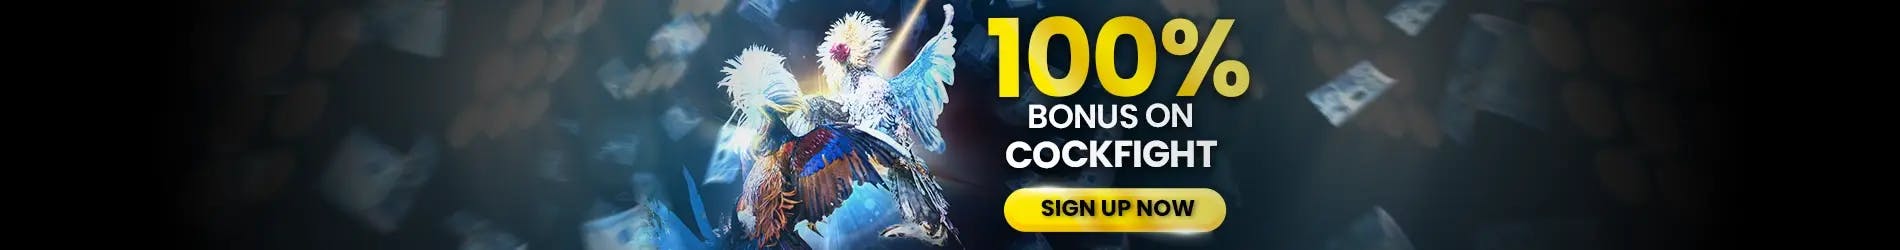 Get P1000 bonus on rooster game